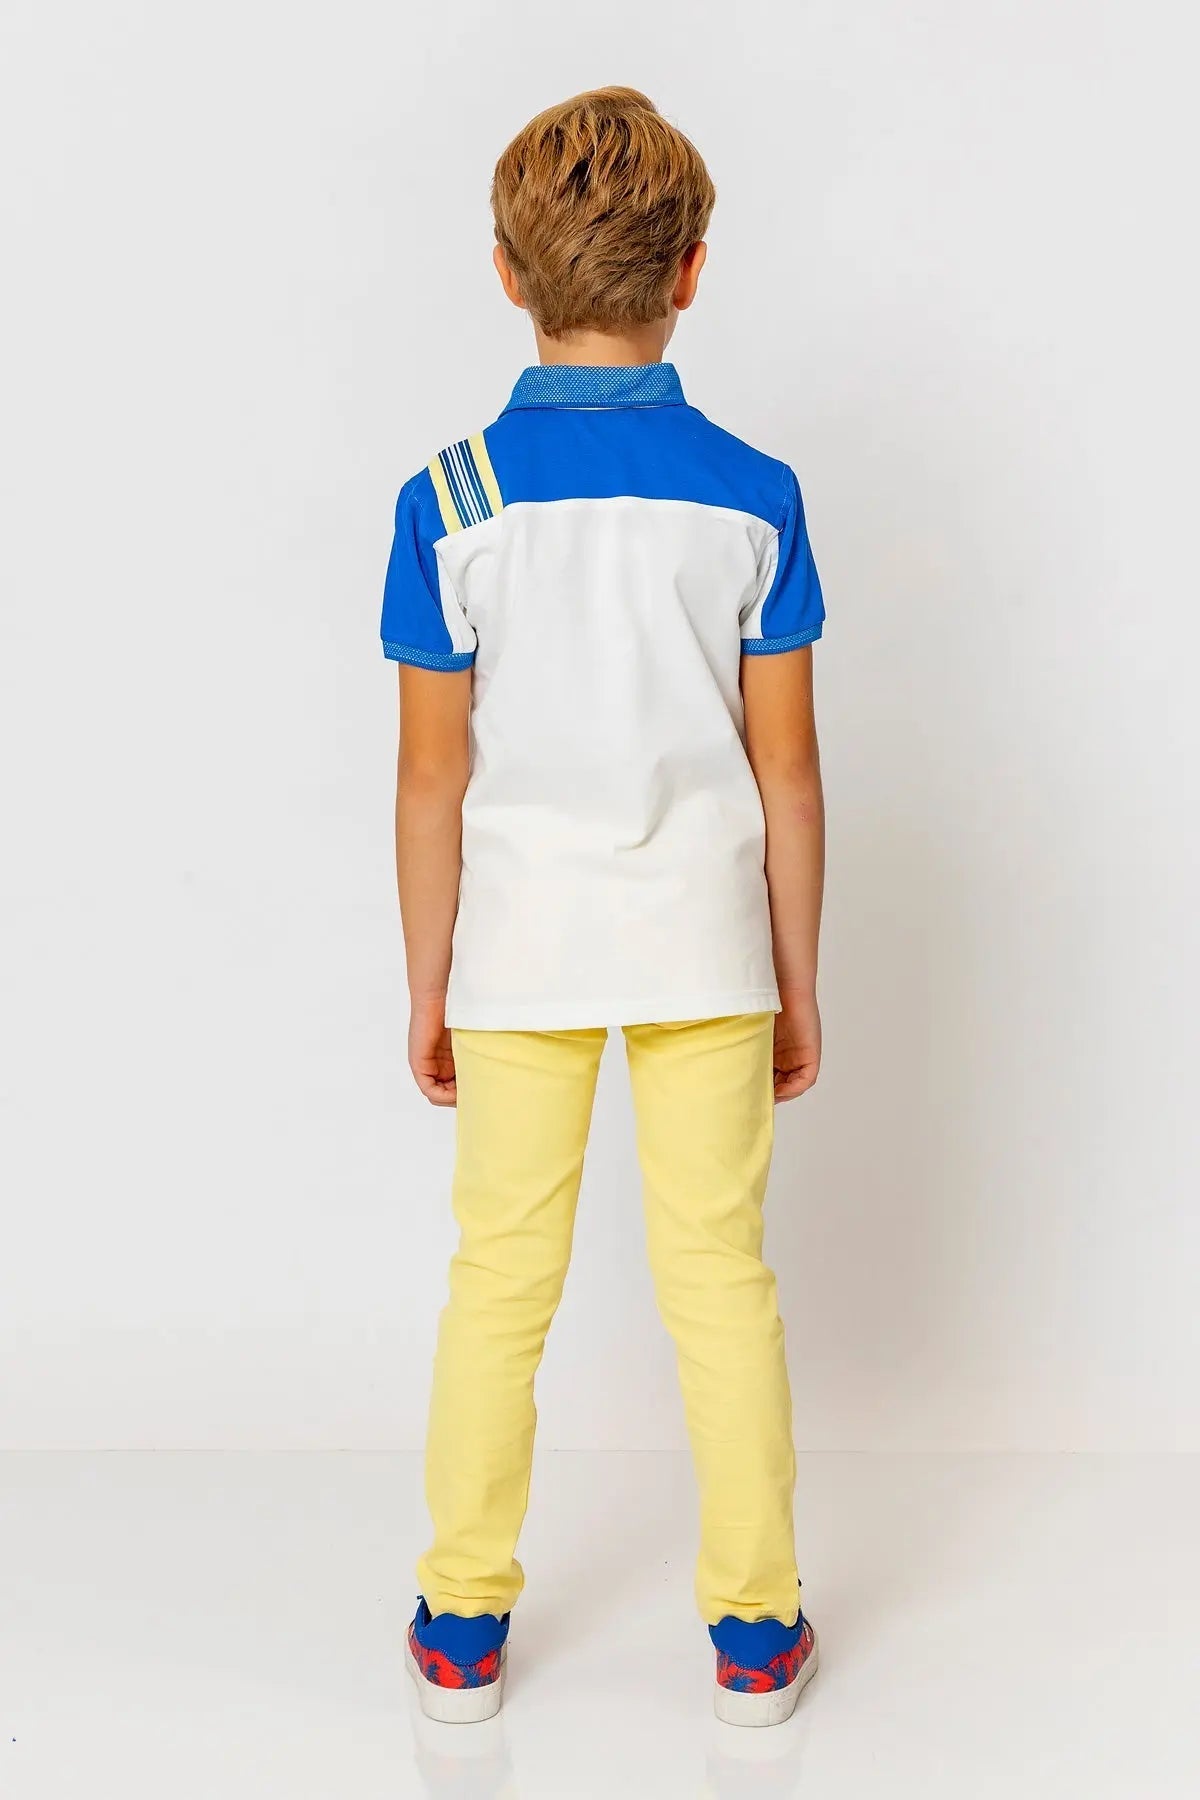 InCity Kids Boys Collared Short Sleeve Polo Shirt InCity Boys & Girls